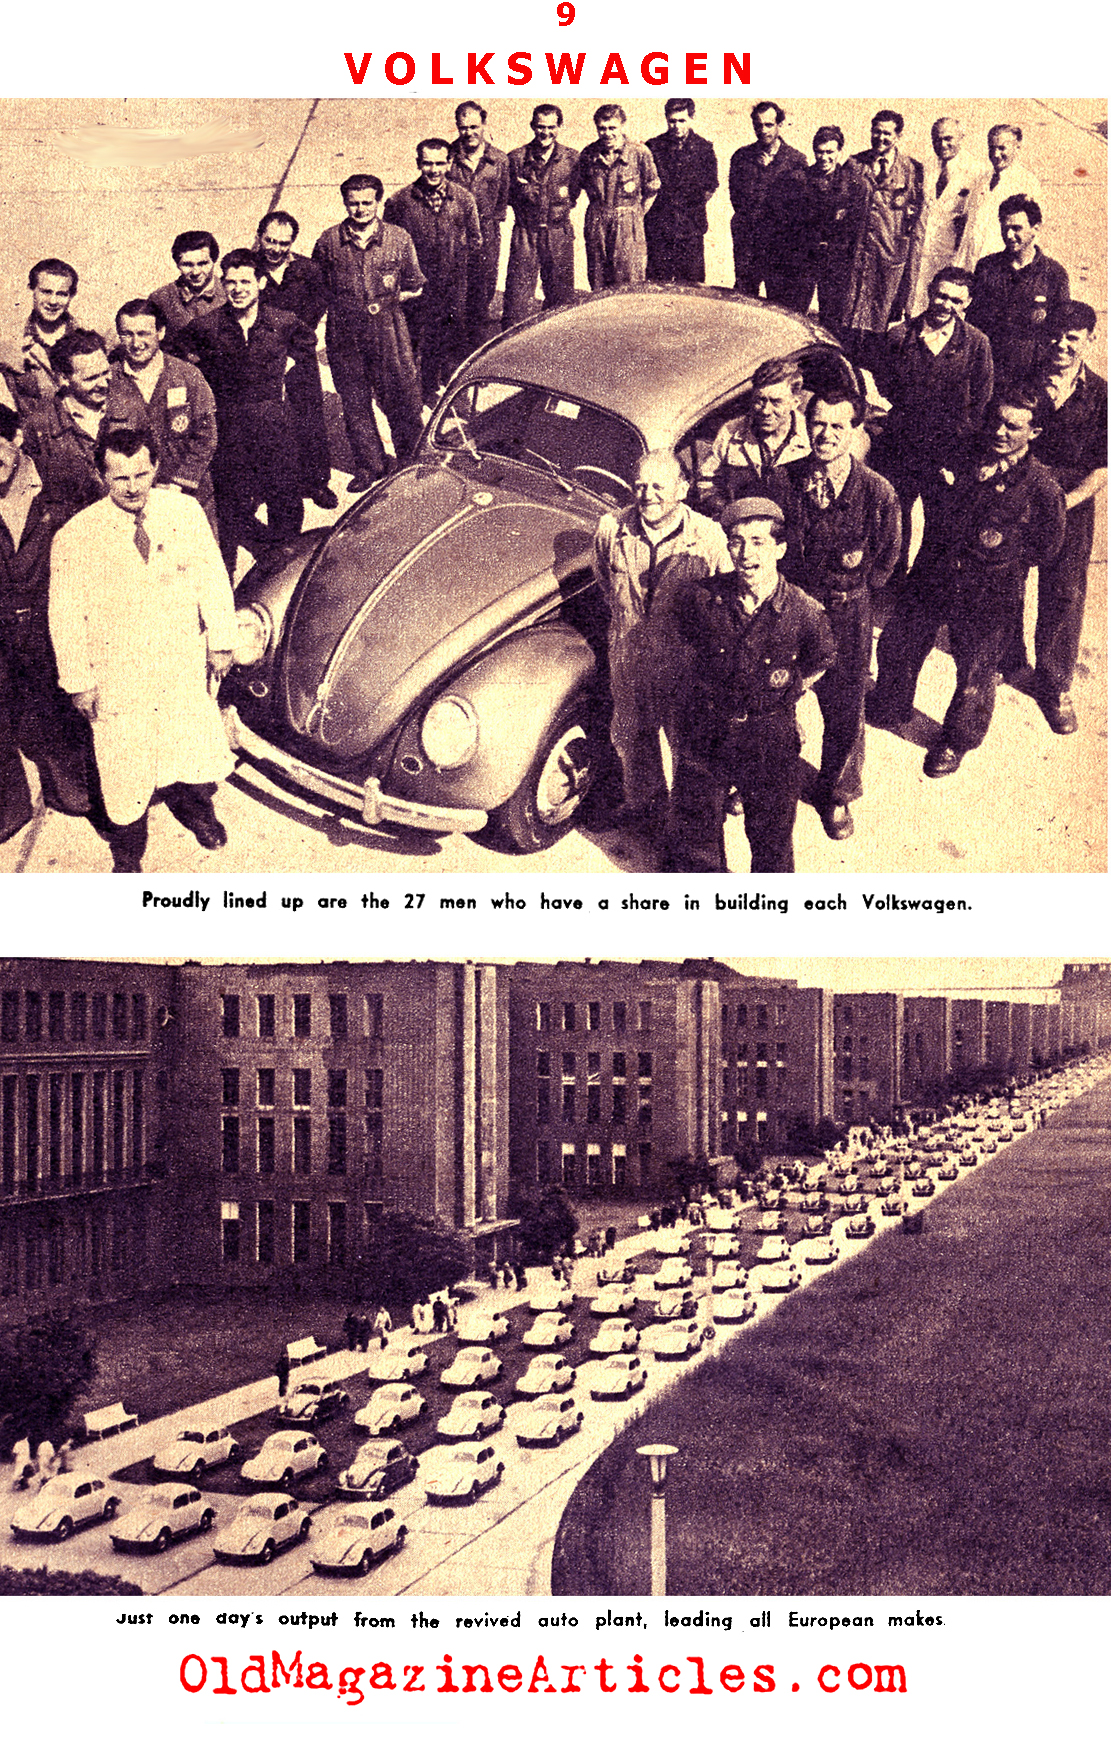 The Amazing Volkswagen (Pic Magazine, 1955)